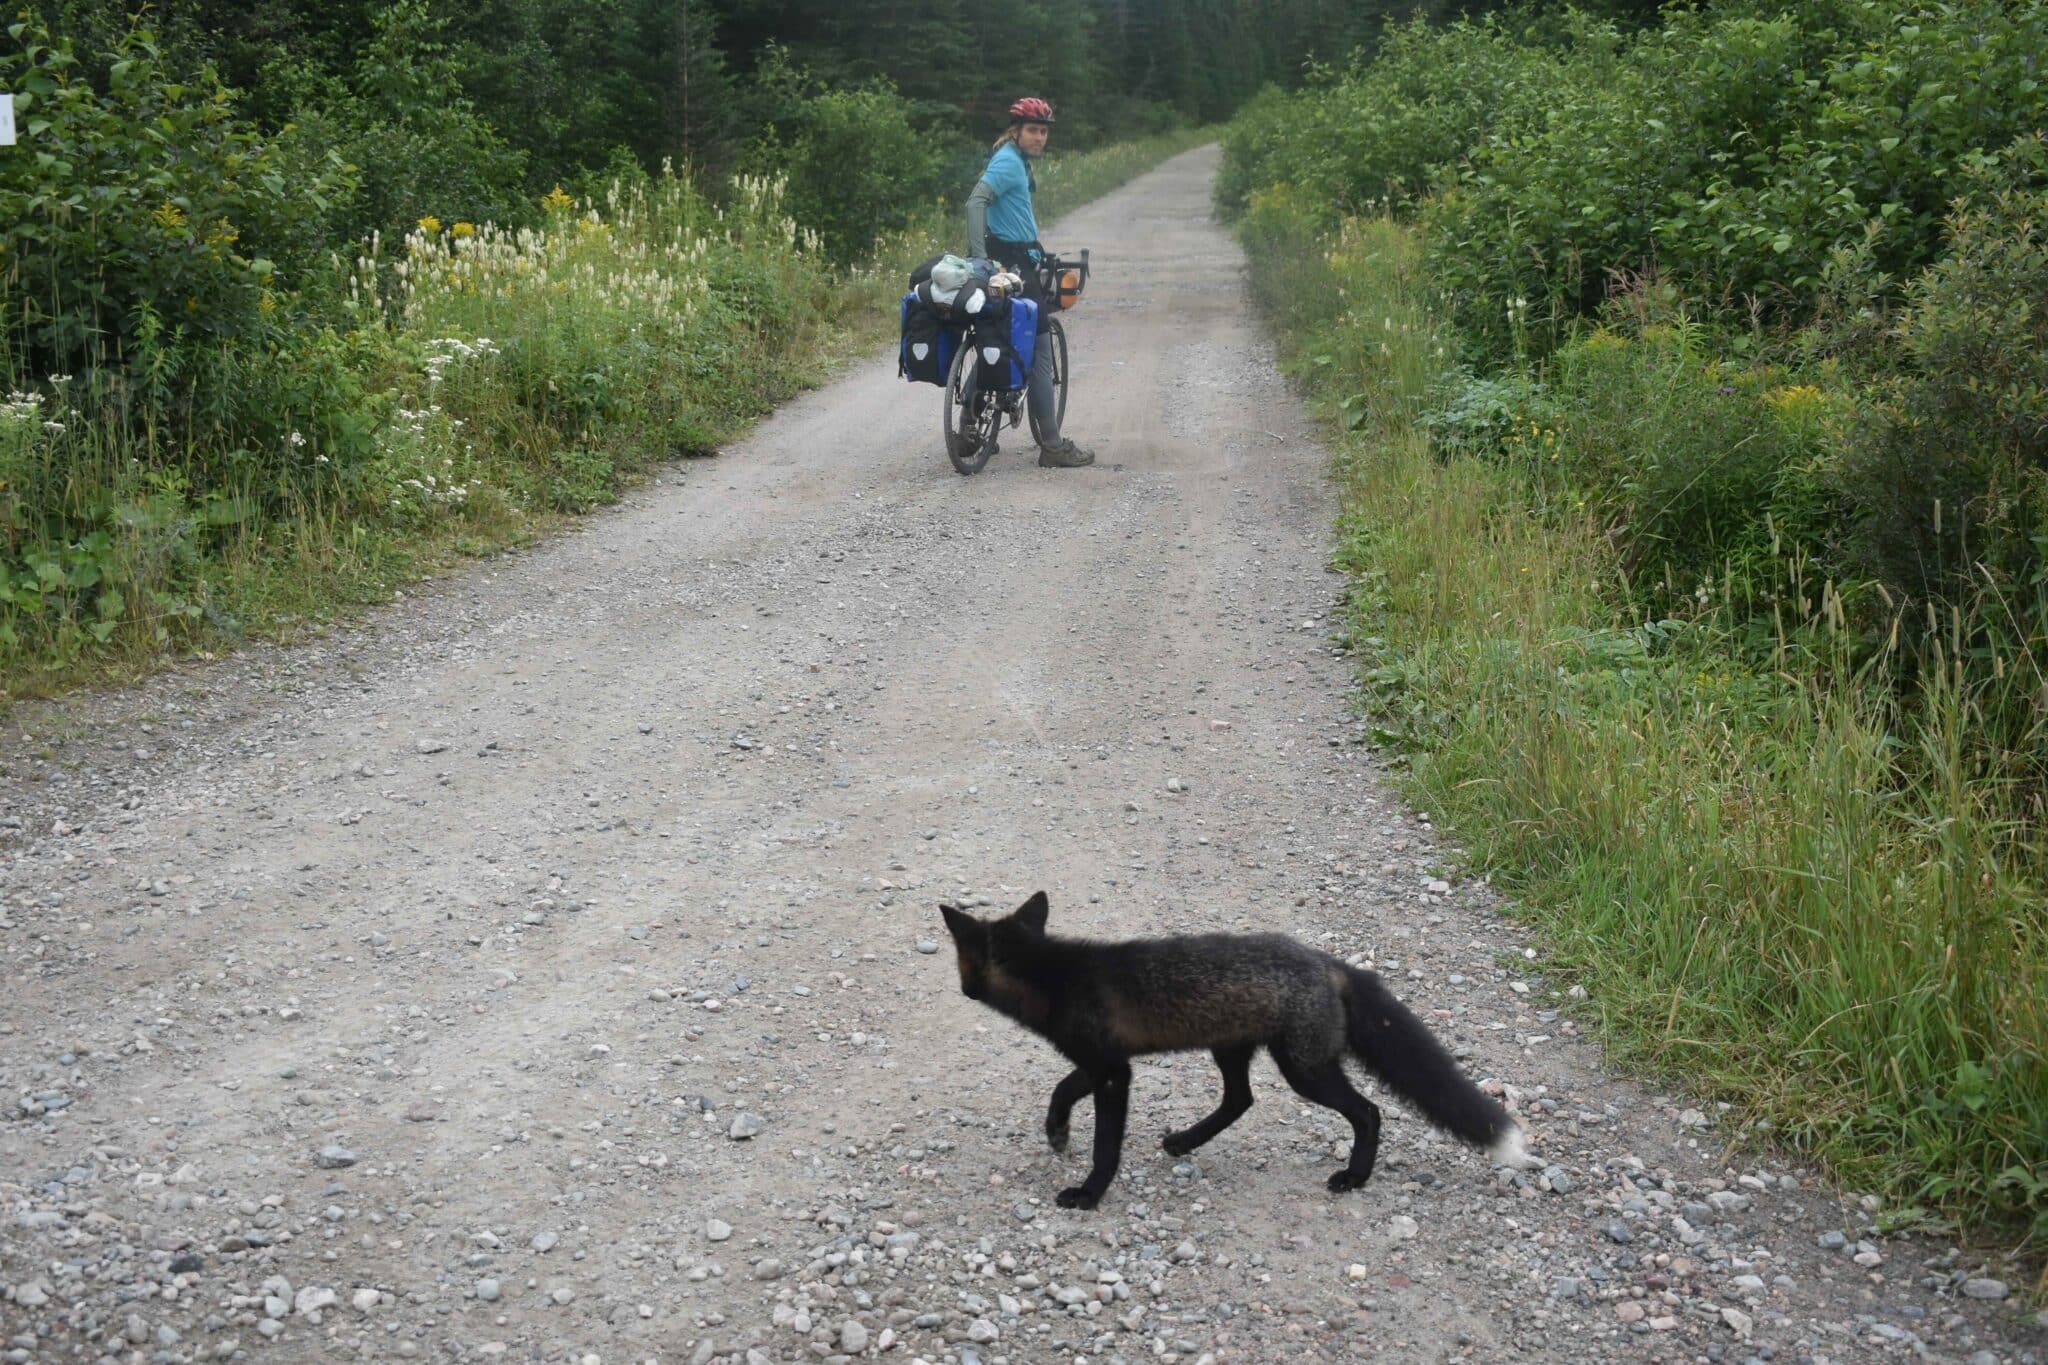 A fox crosses a dirt road looking at a passing bikepacker.